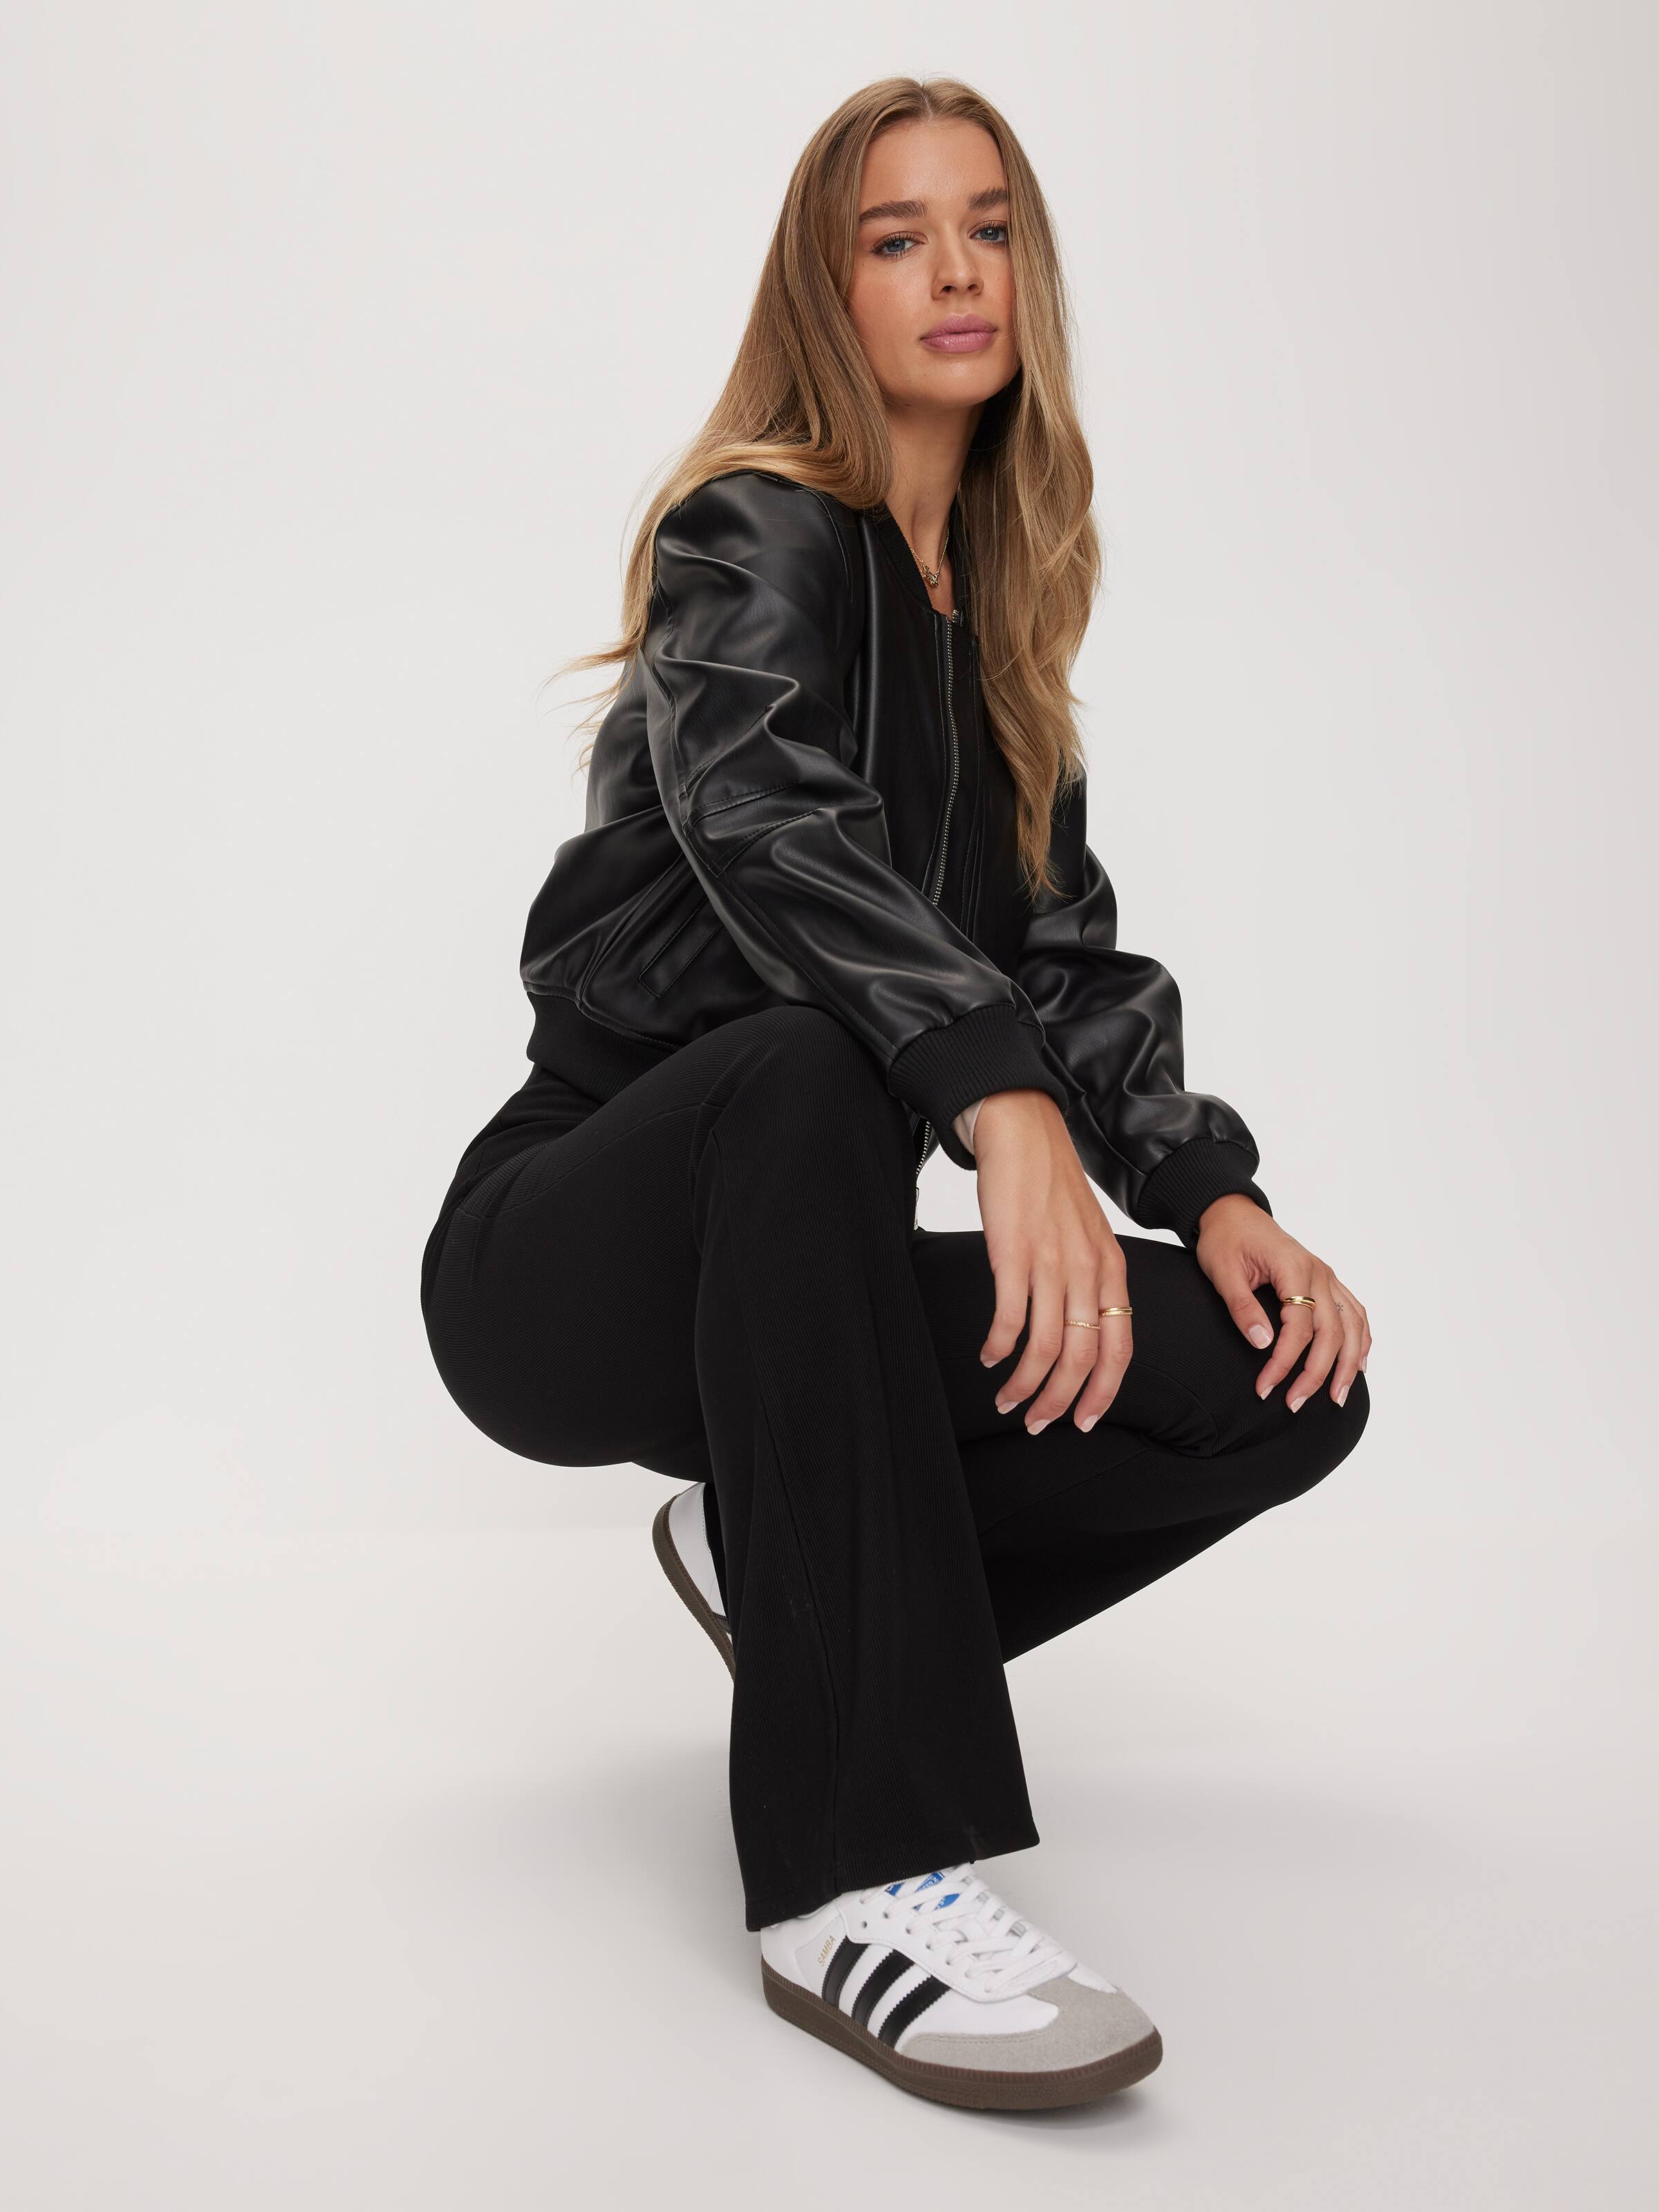 Women's Black Trousers, Linen, Leather & Sequin